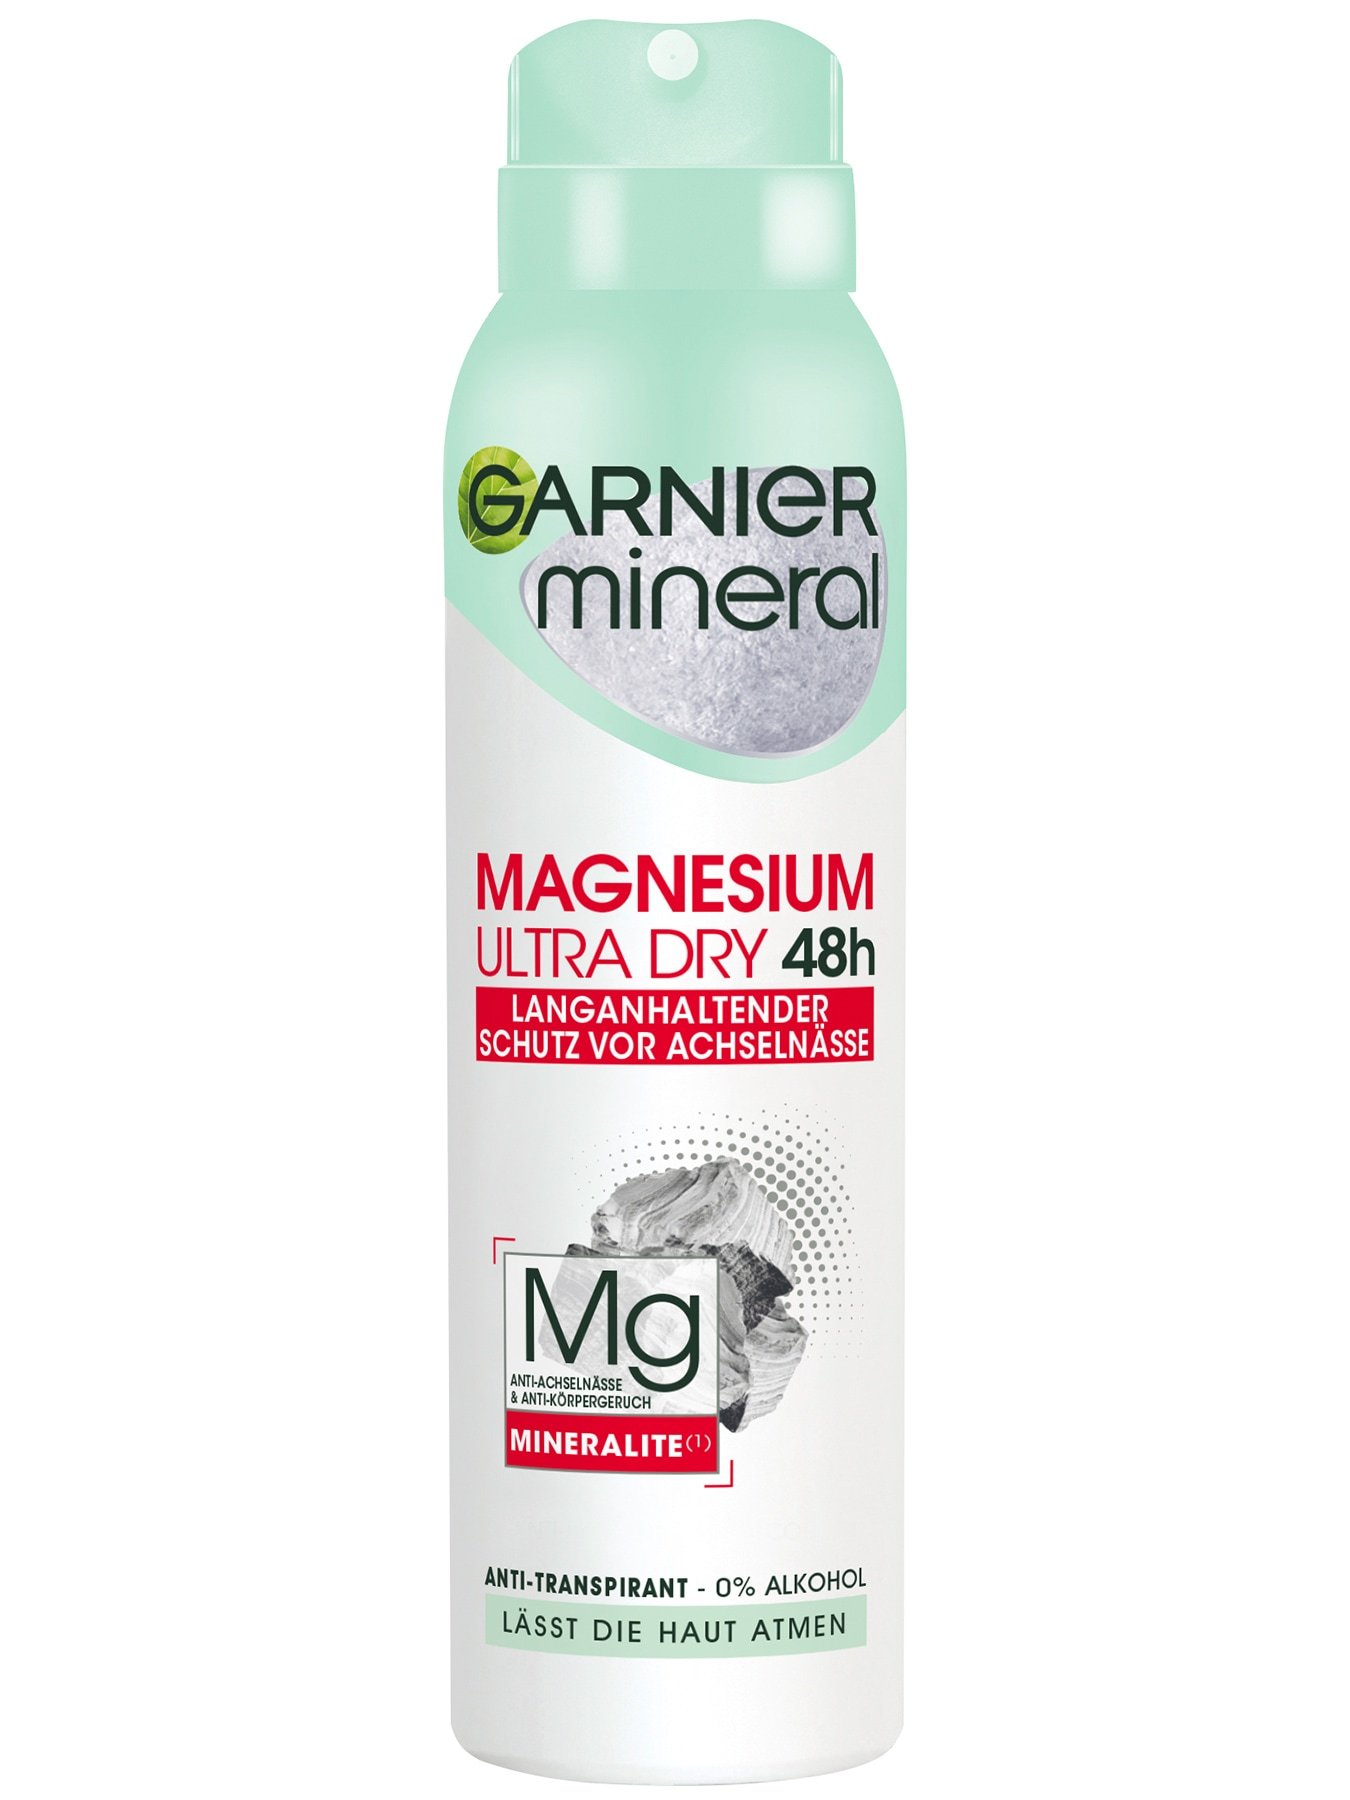 Garnier Mineral Magnesium Deodorant vorne 